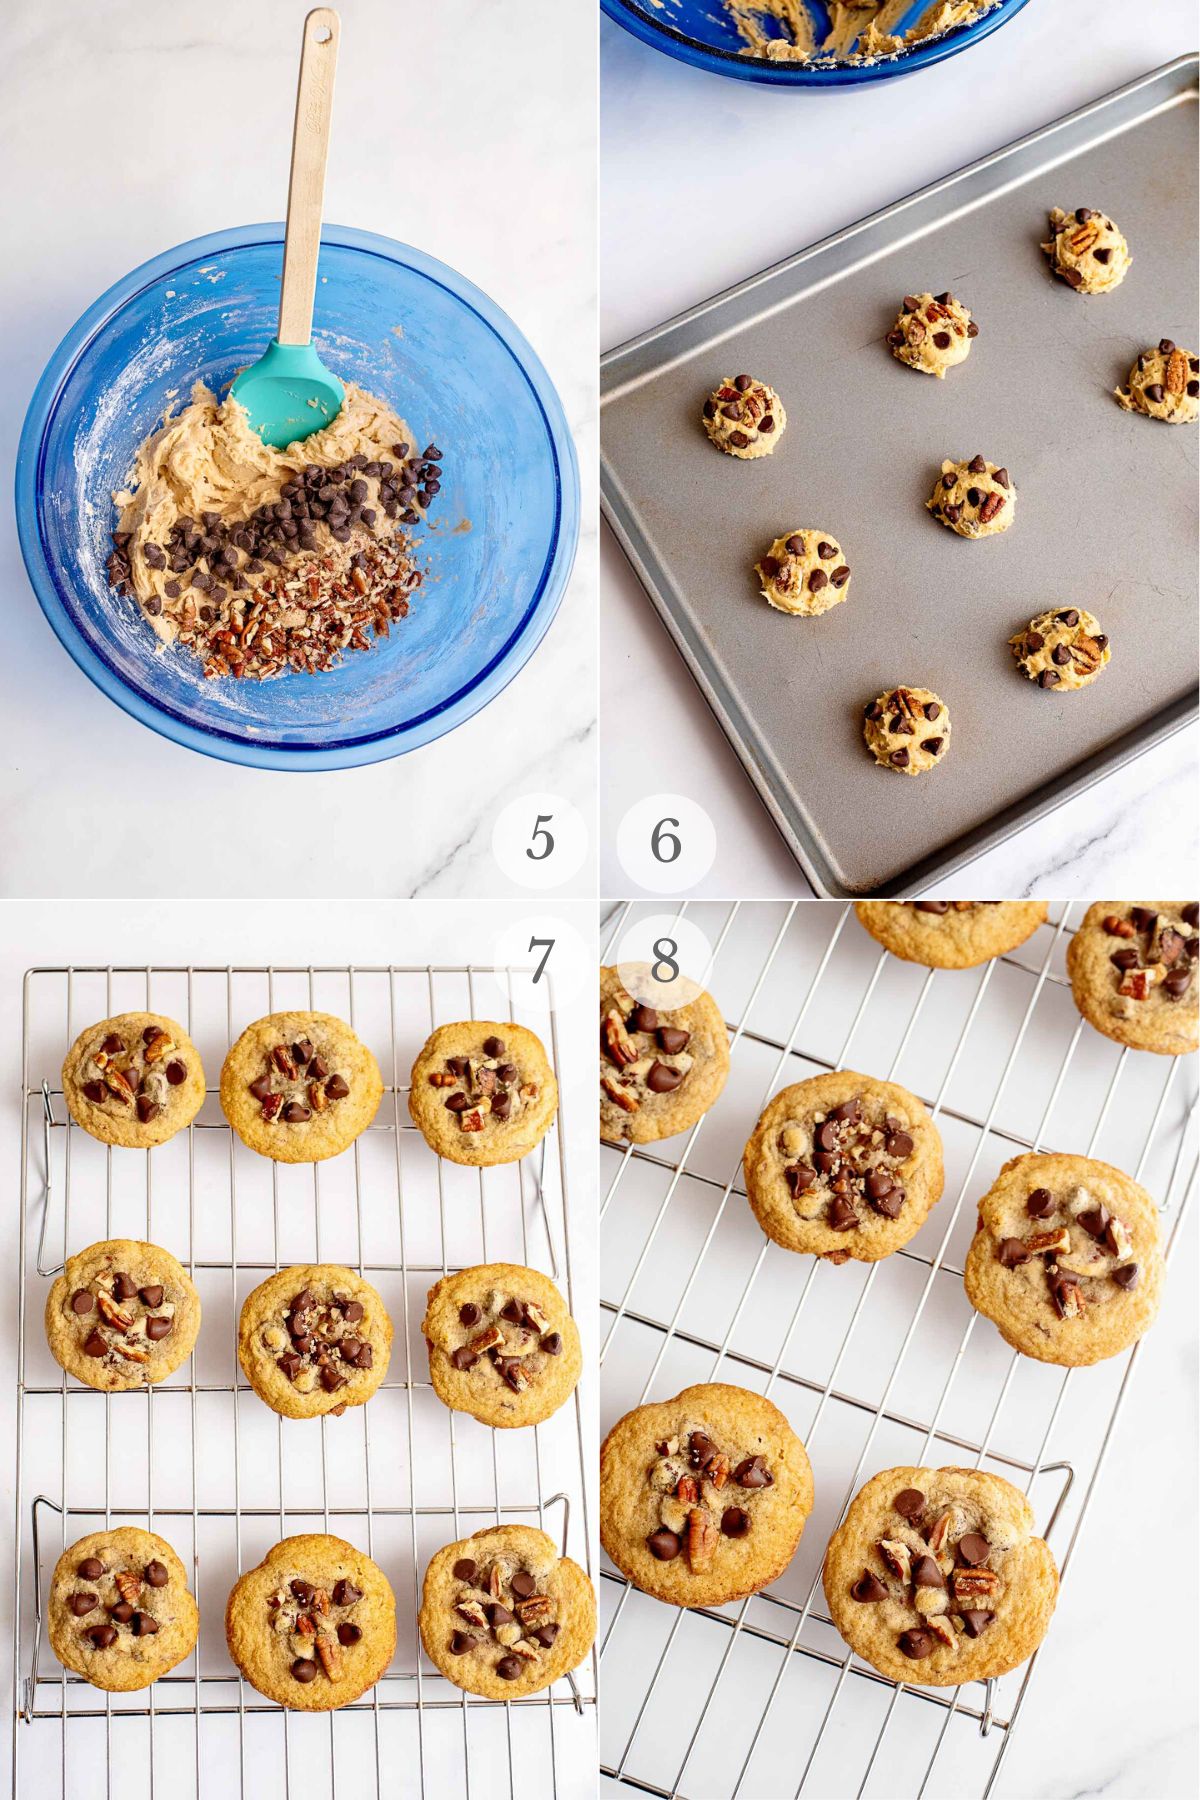 chocolate chip pecan cookies recipe steps 5-8.